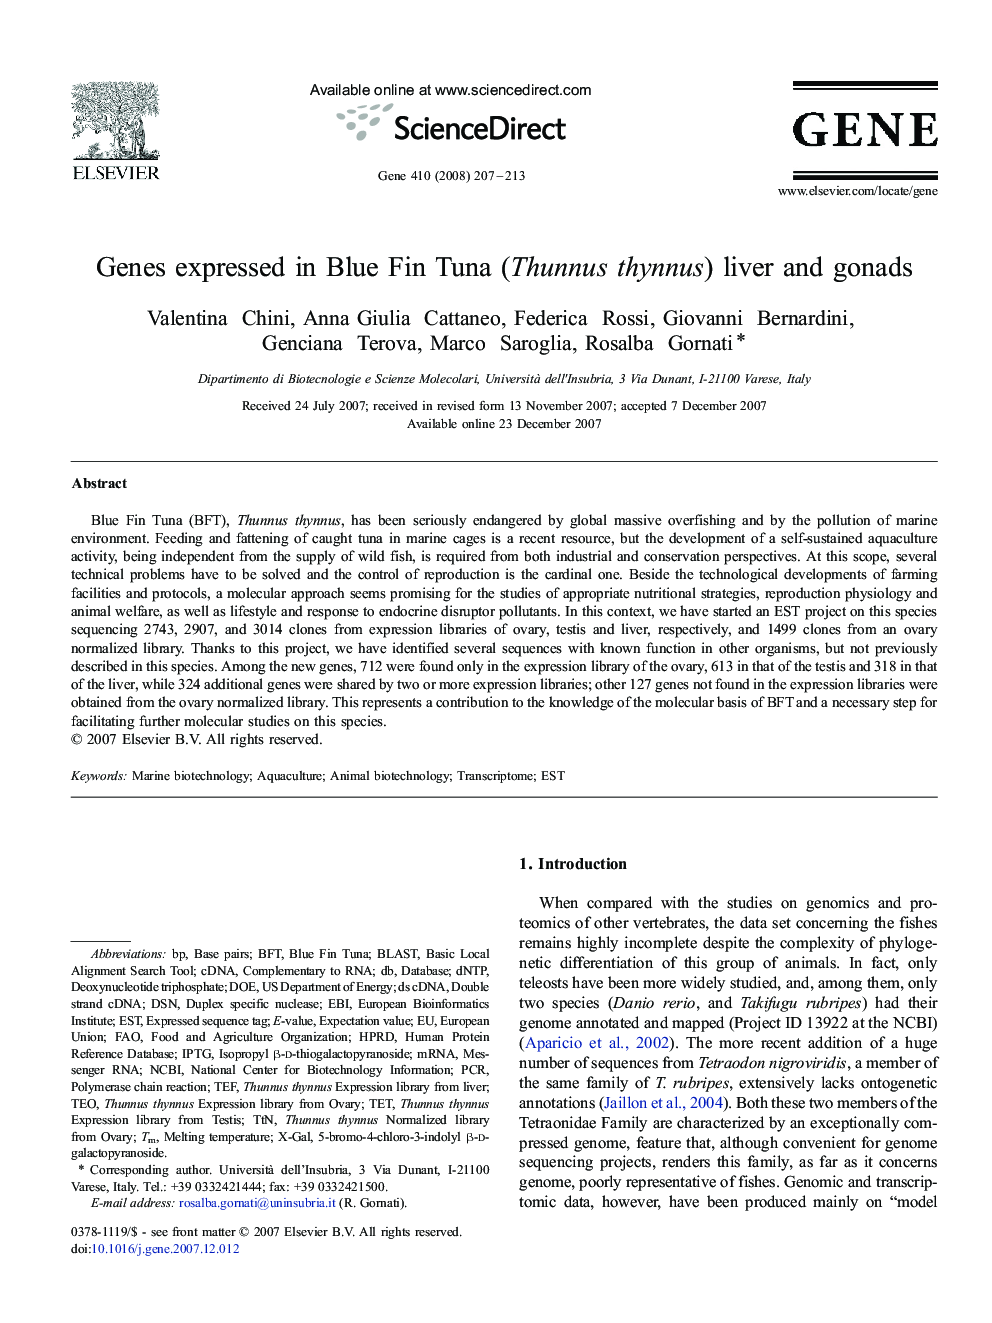 Genes expressed in Blue Fin Tuna (Thunnus thynnus) liver and gonads